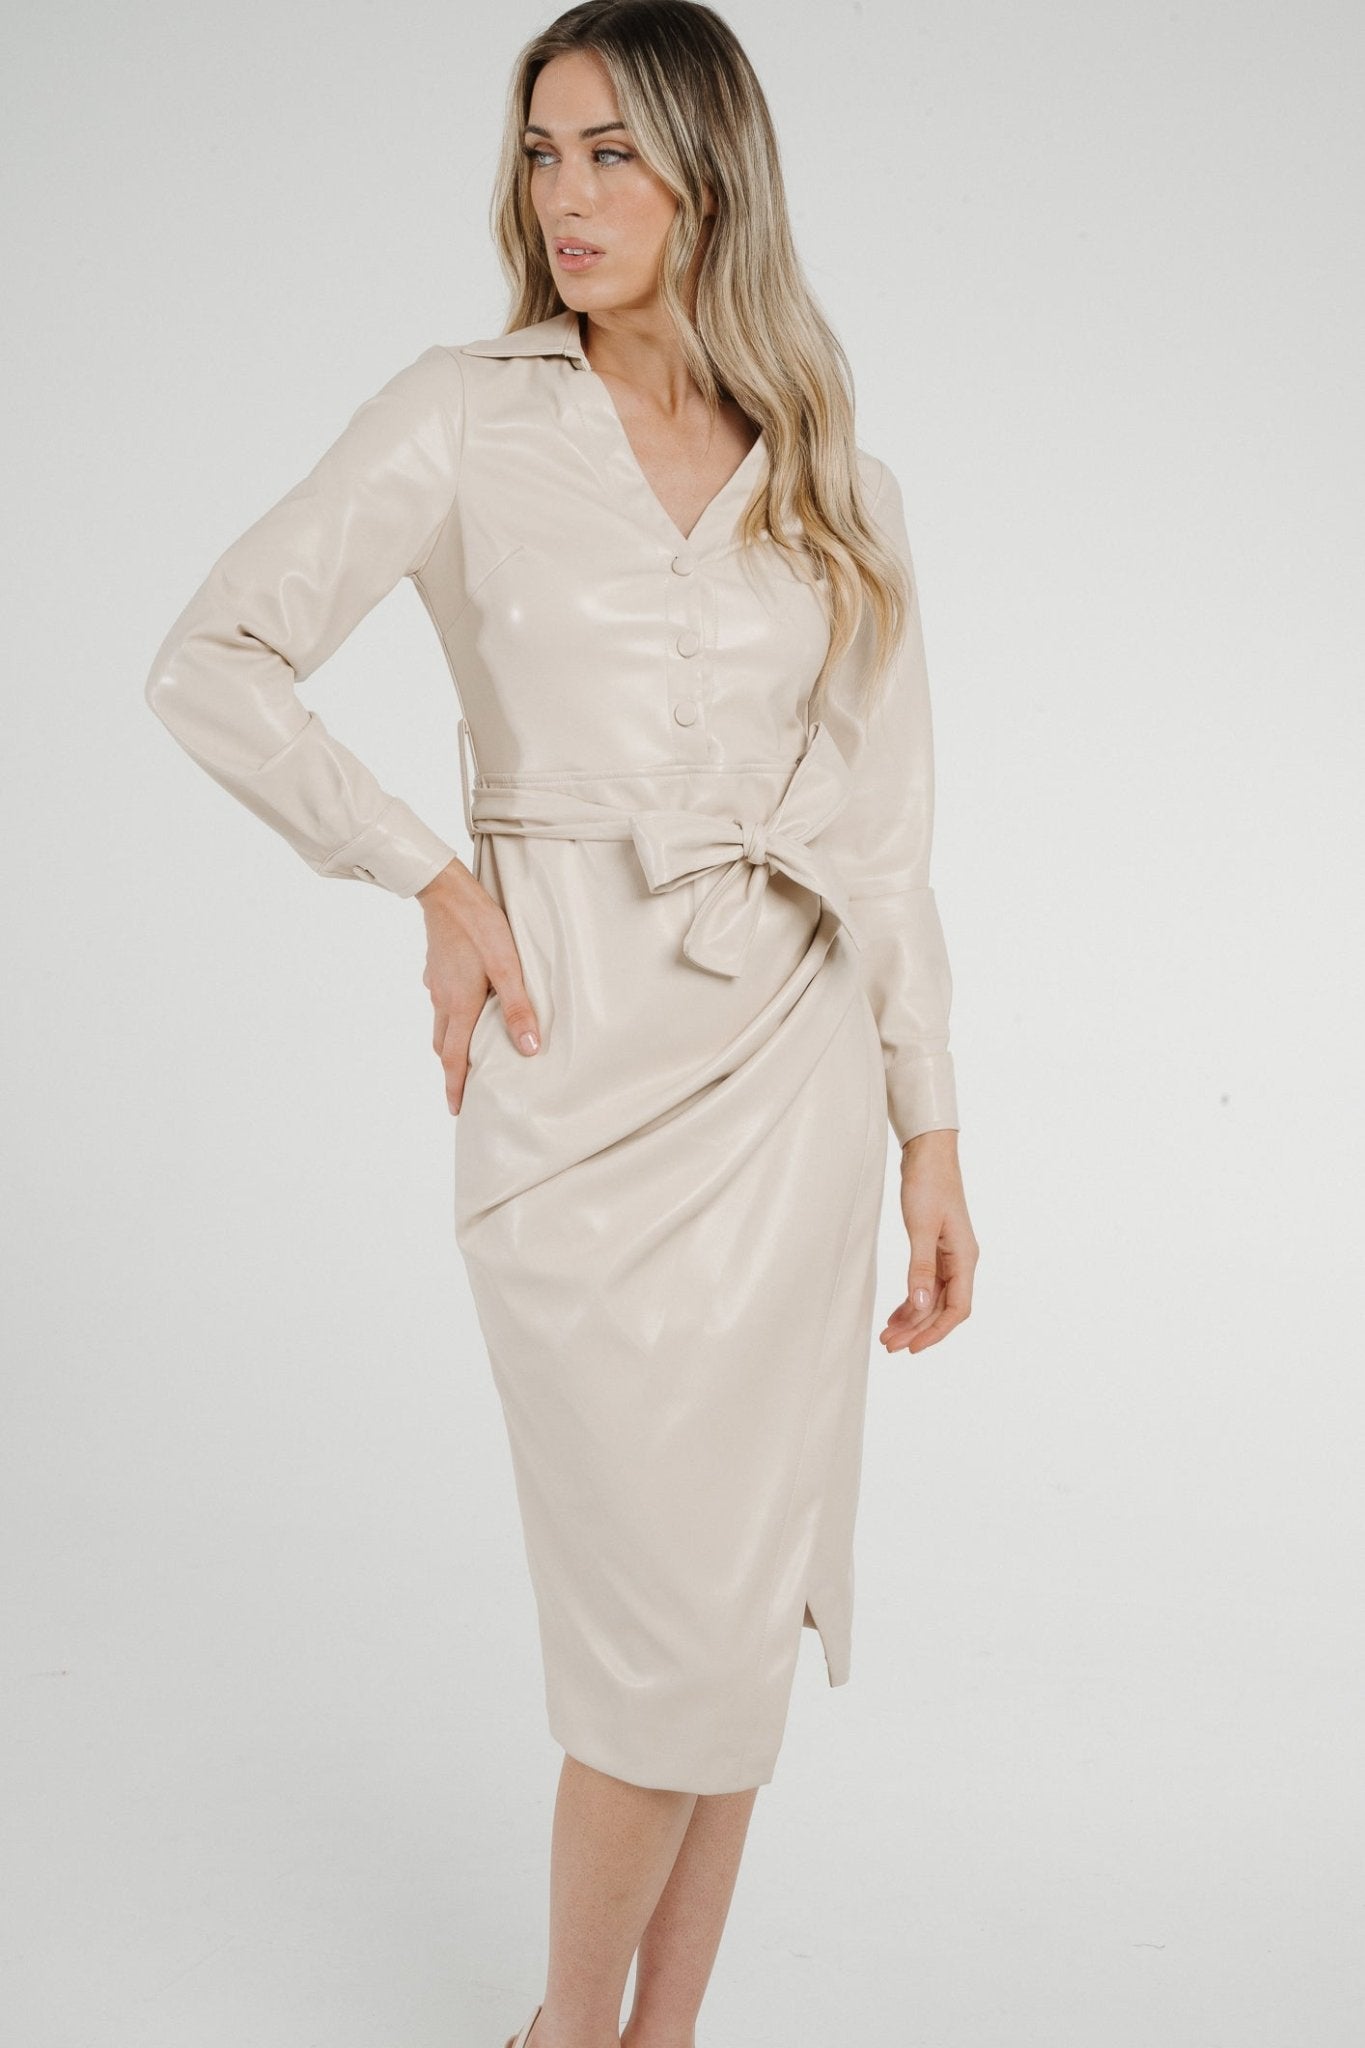 Pia Faux Leather Wrap Dress In Cream - The Walk in Wardrobe